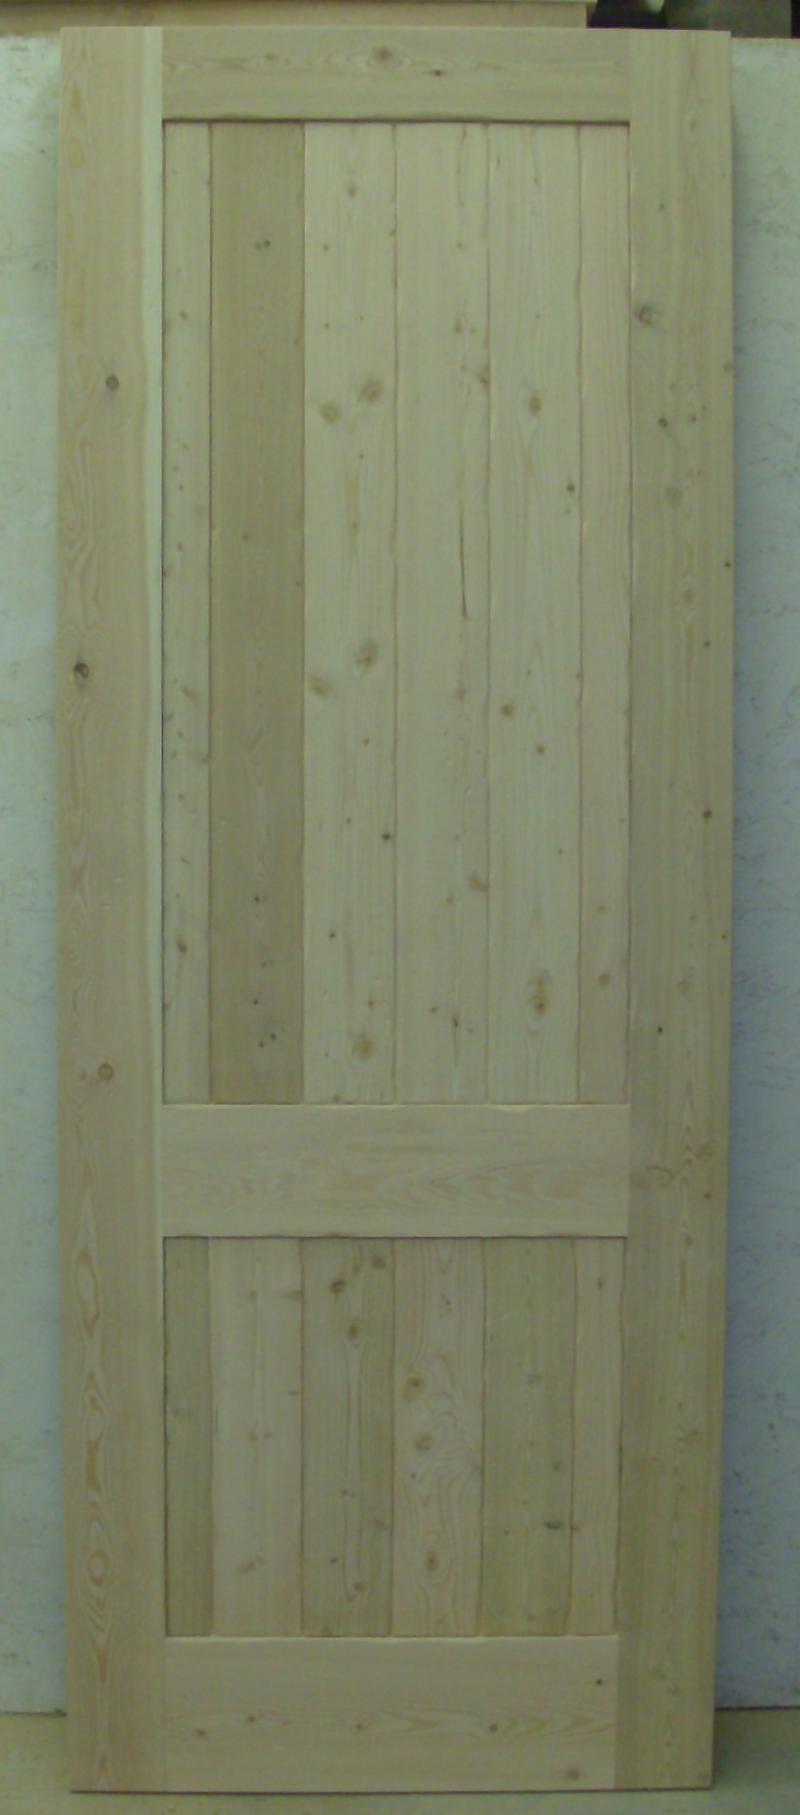 Fir two panel plank style door with medium distress.